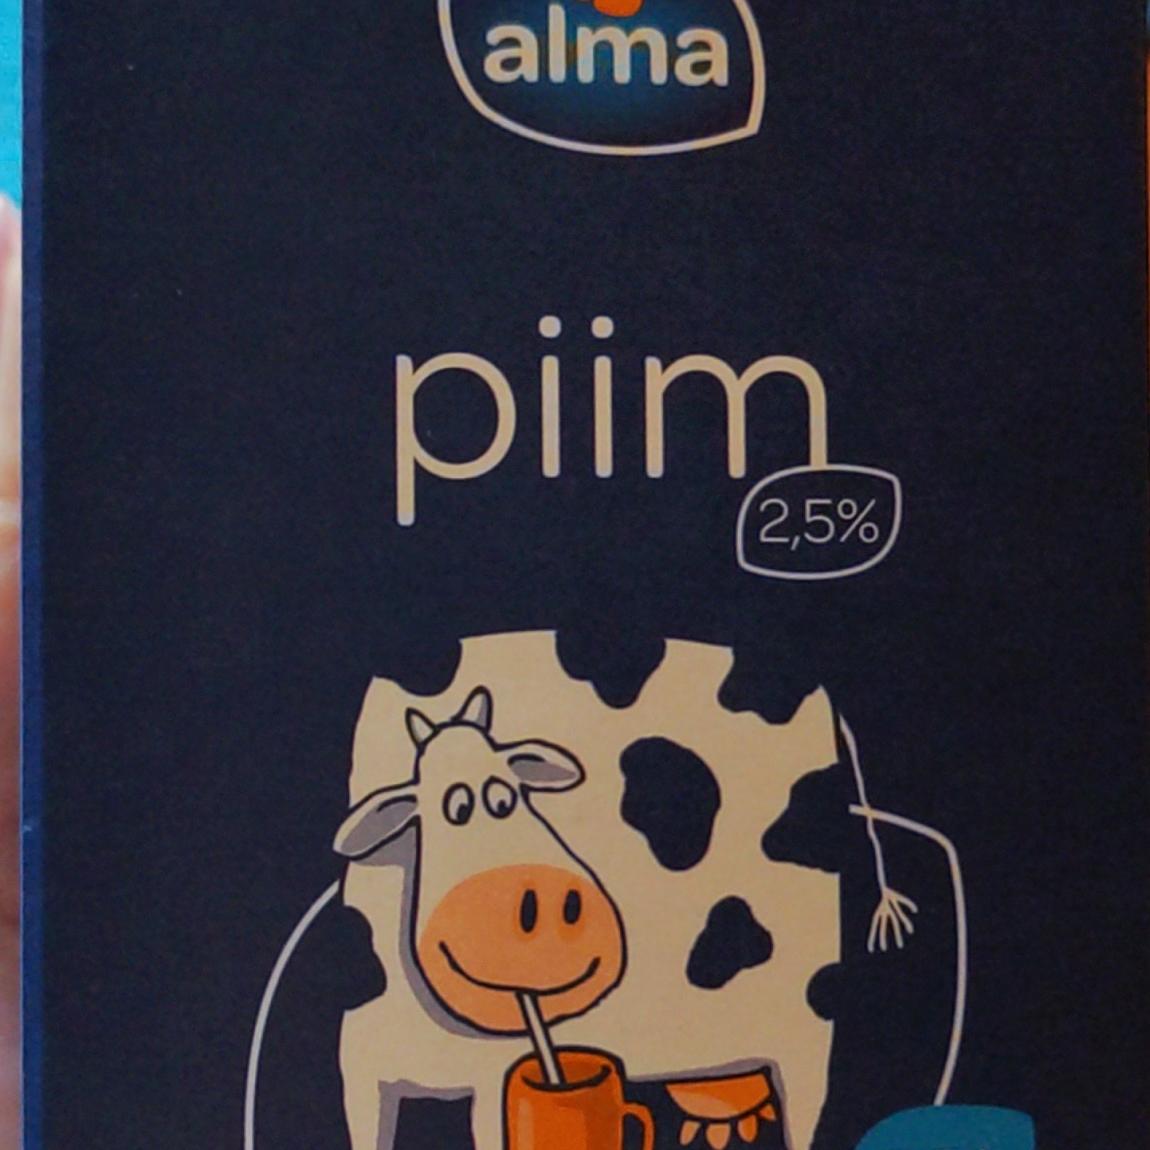 Фото - Молоко piim 2.5% Alma